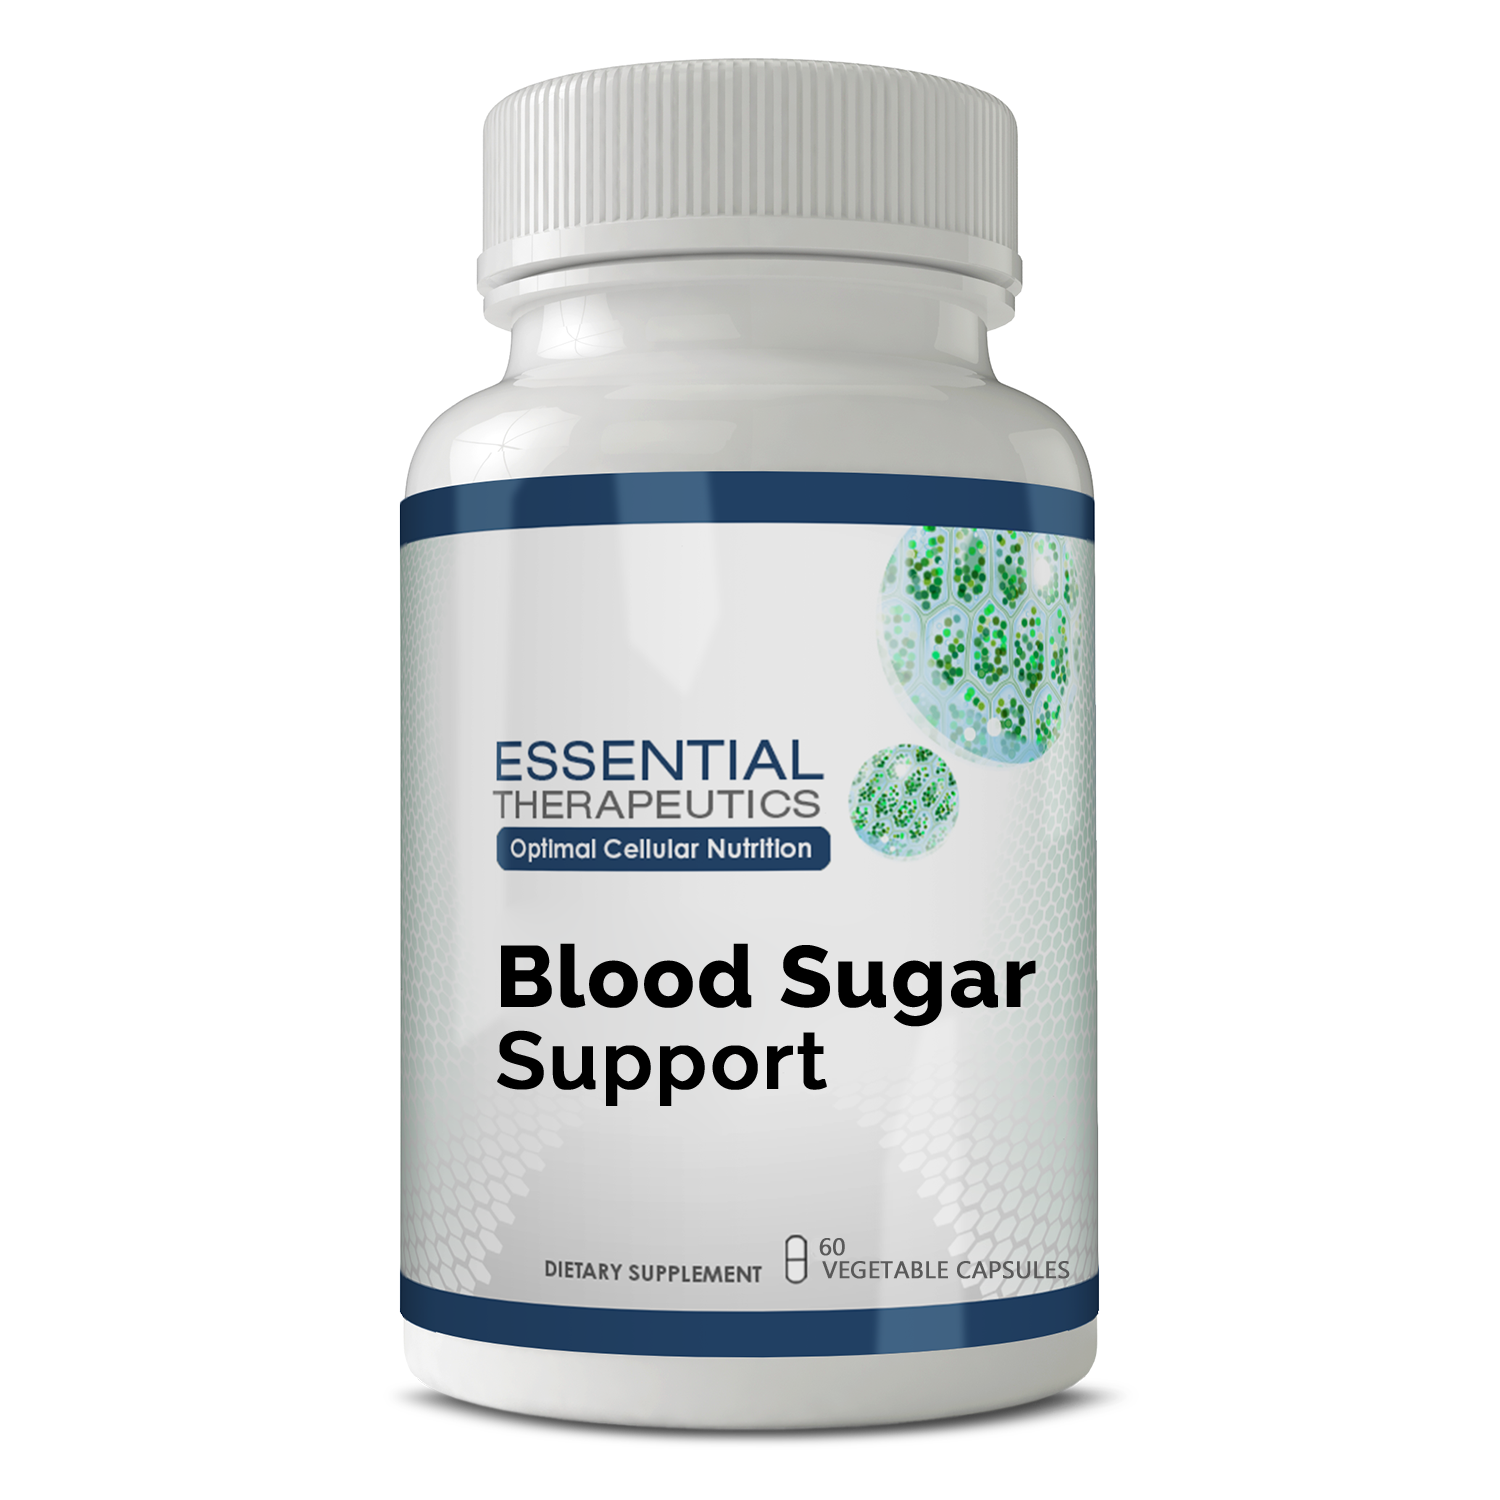 Blood sugar support formulas